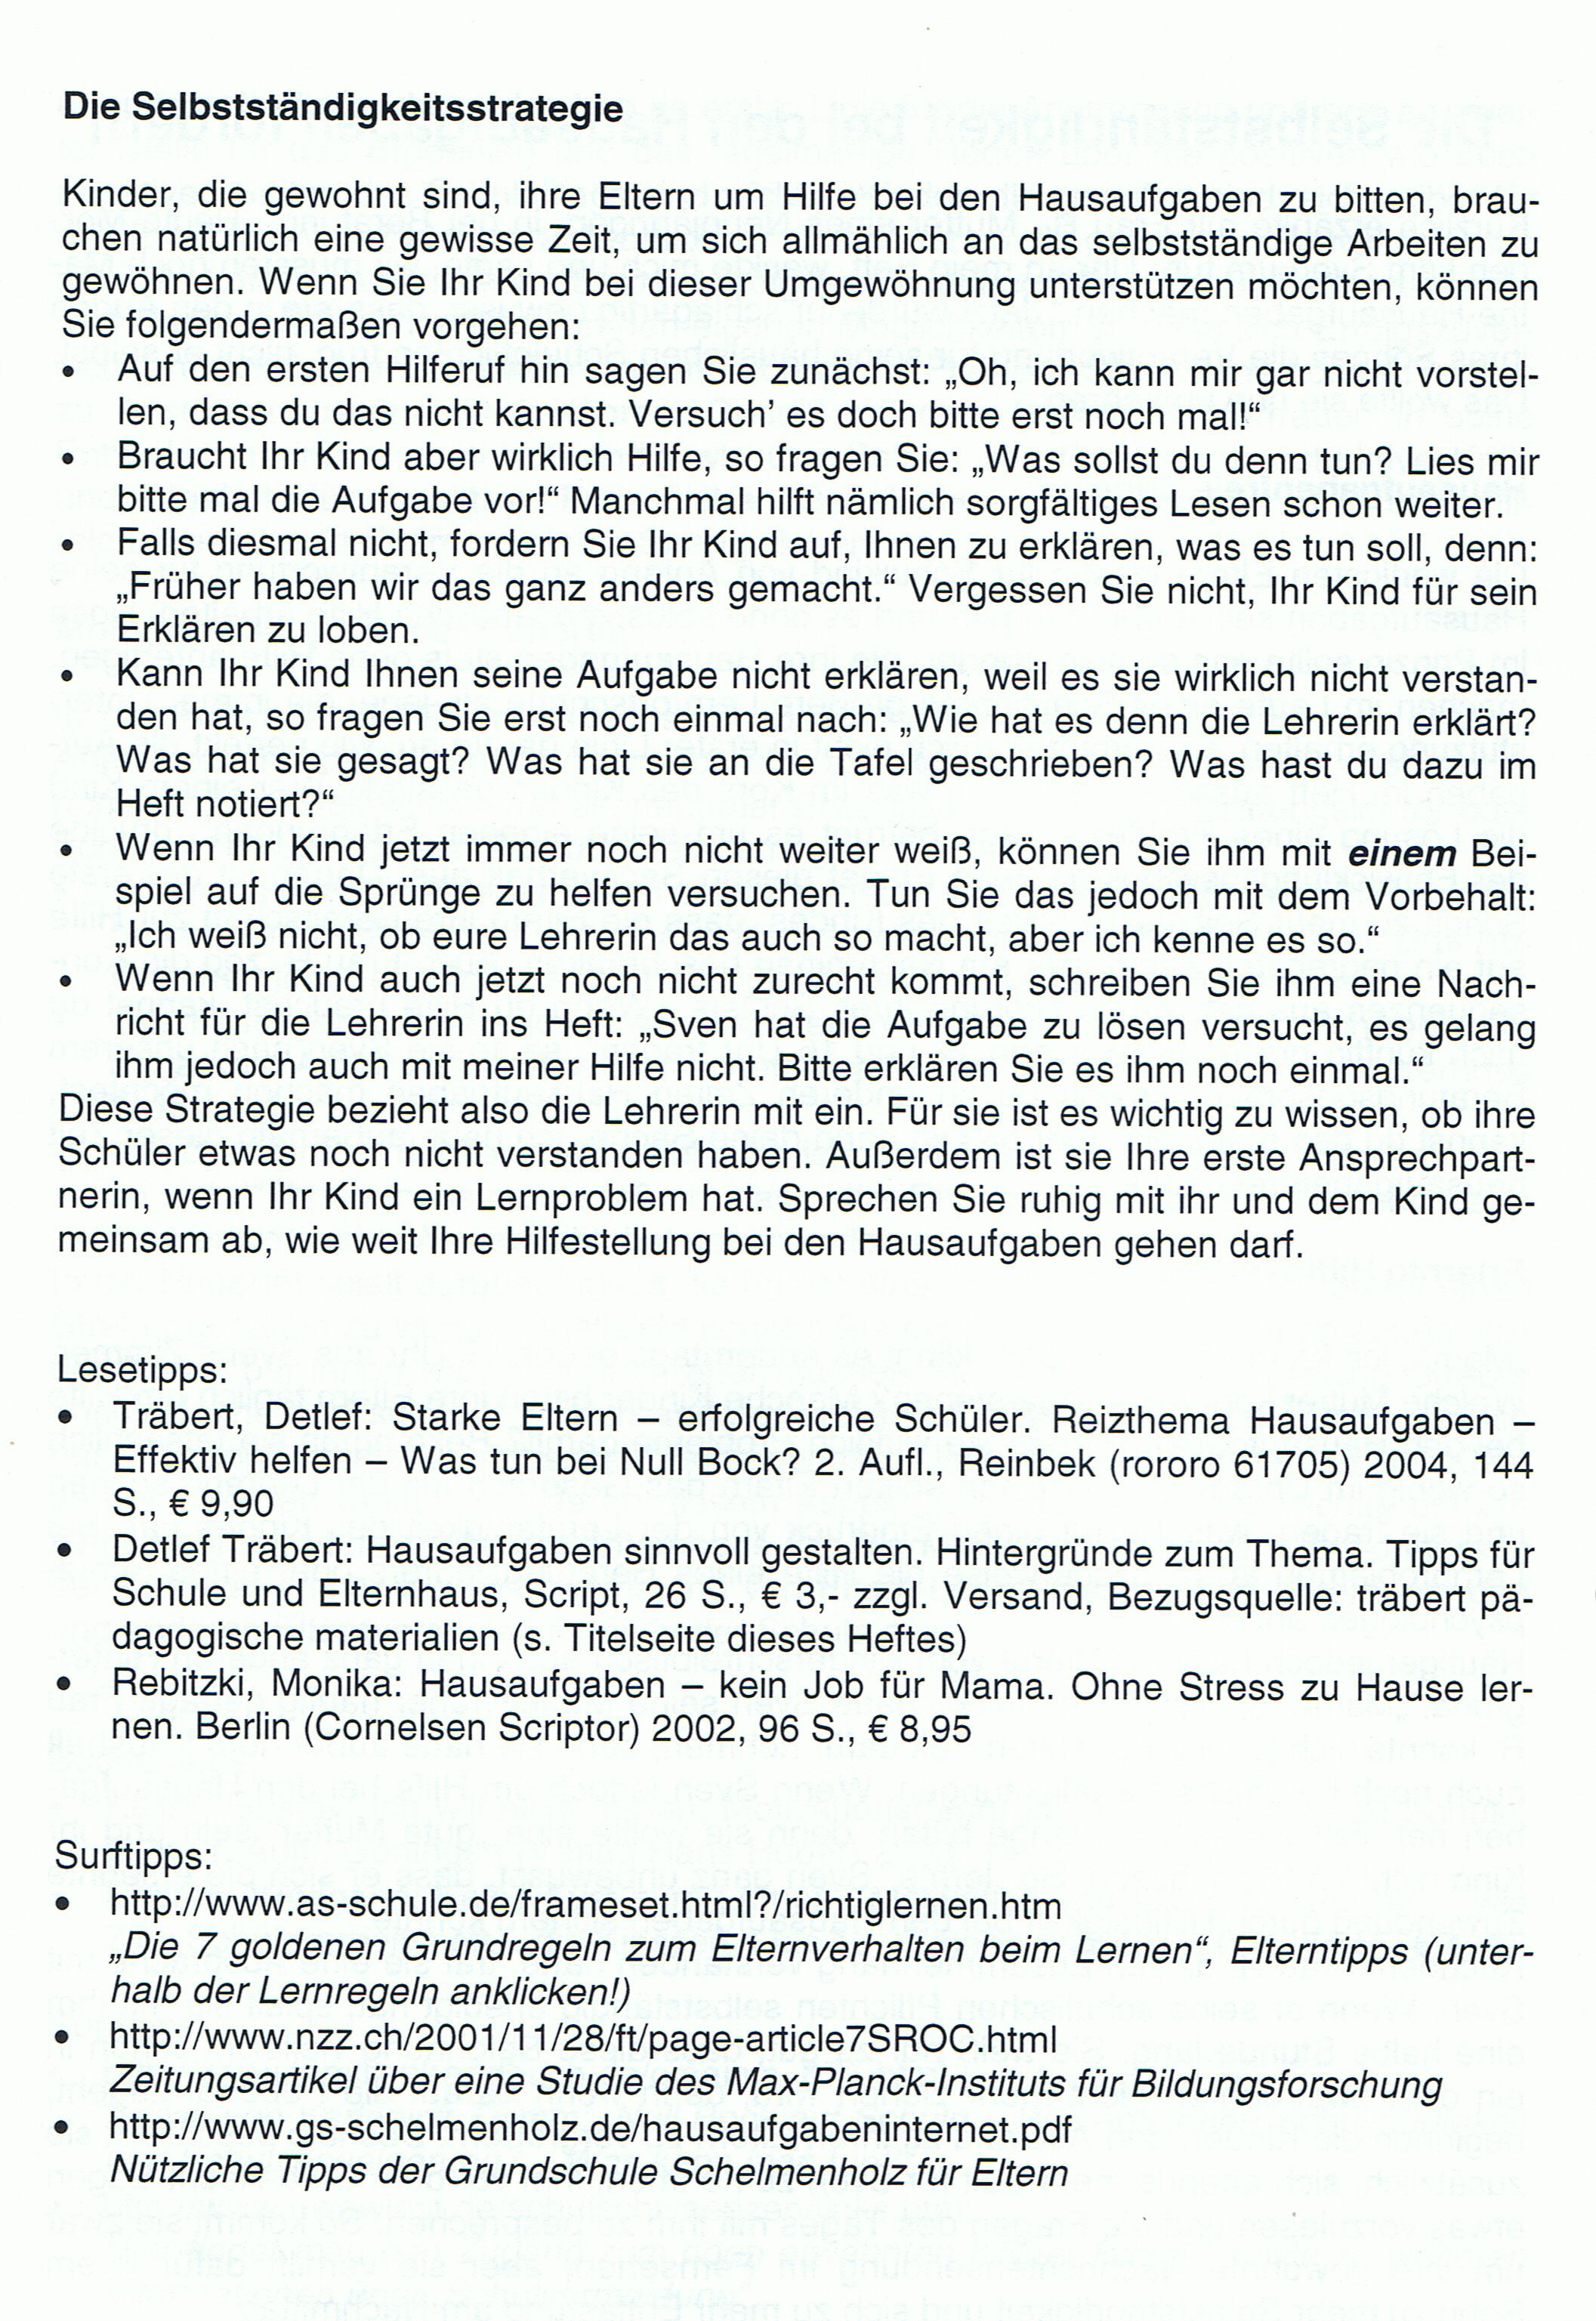 B 6.4 Hausaufgaben Nach Detlev Träbert, träbert pädagogische materialien 2005, So können Schüler